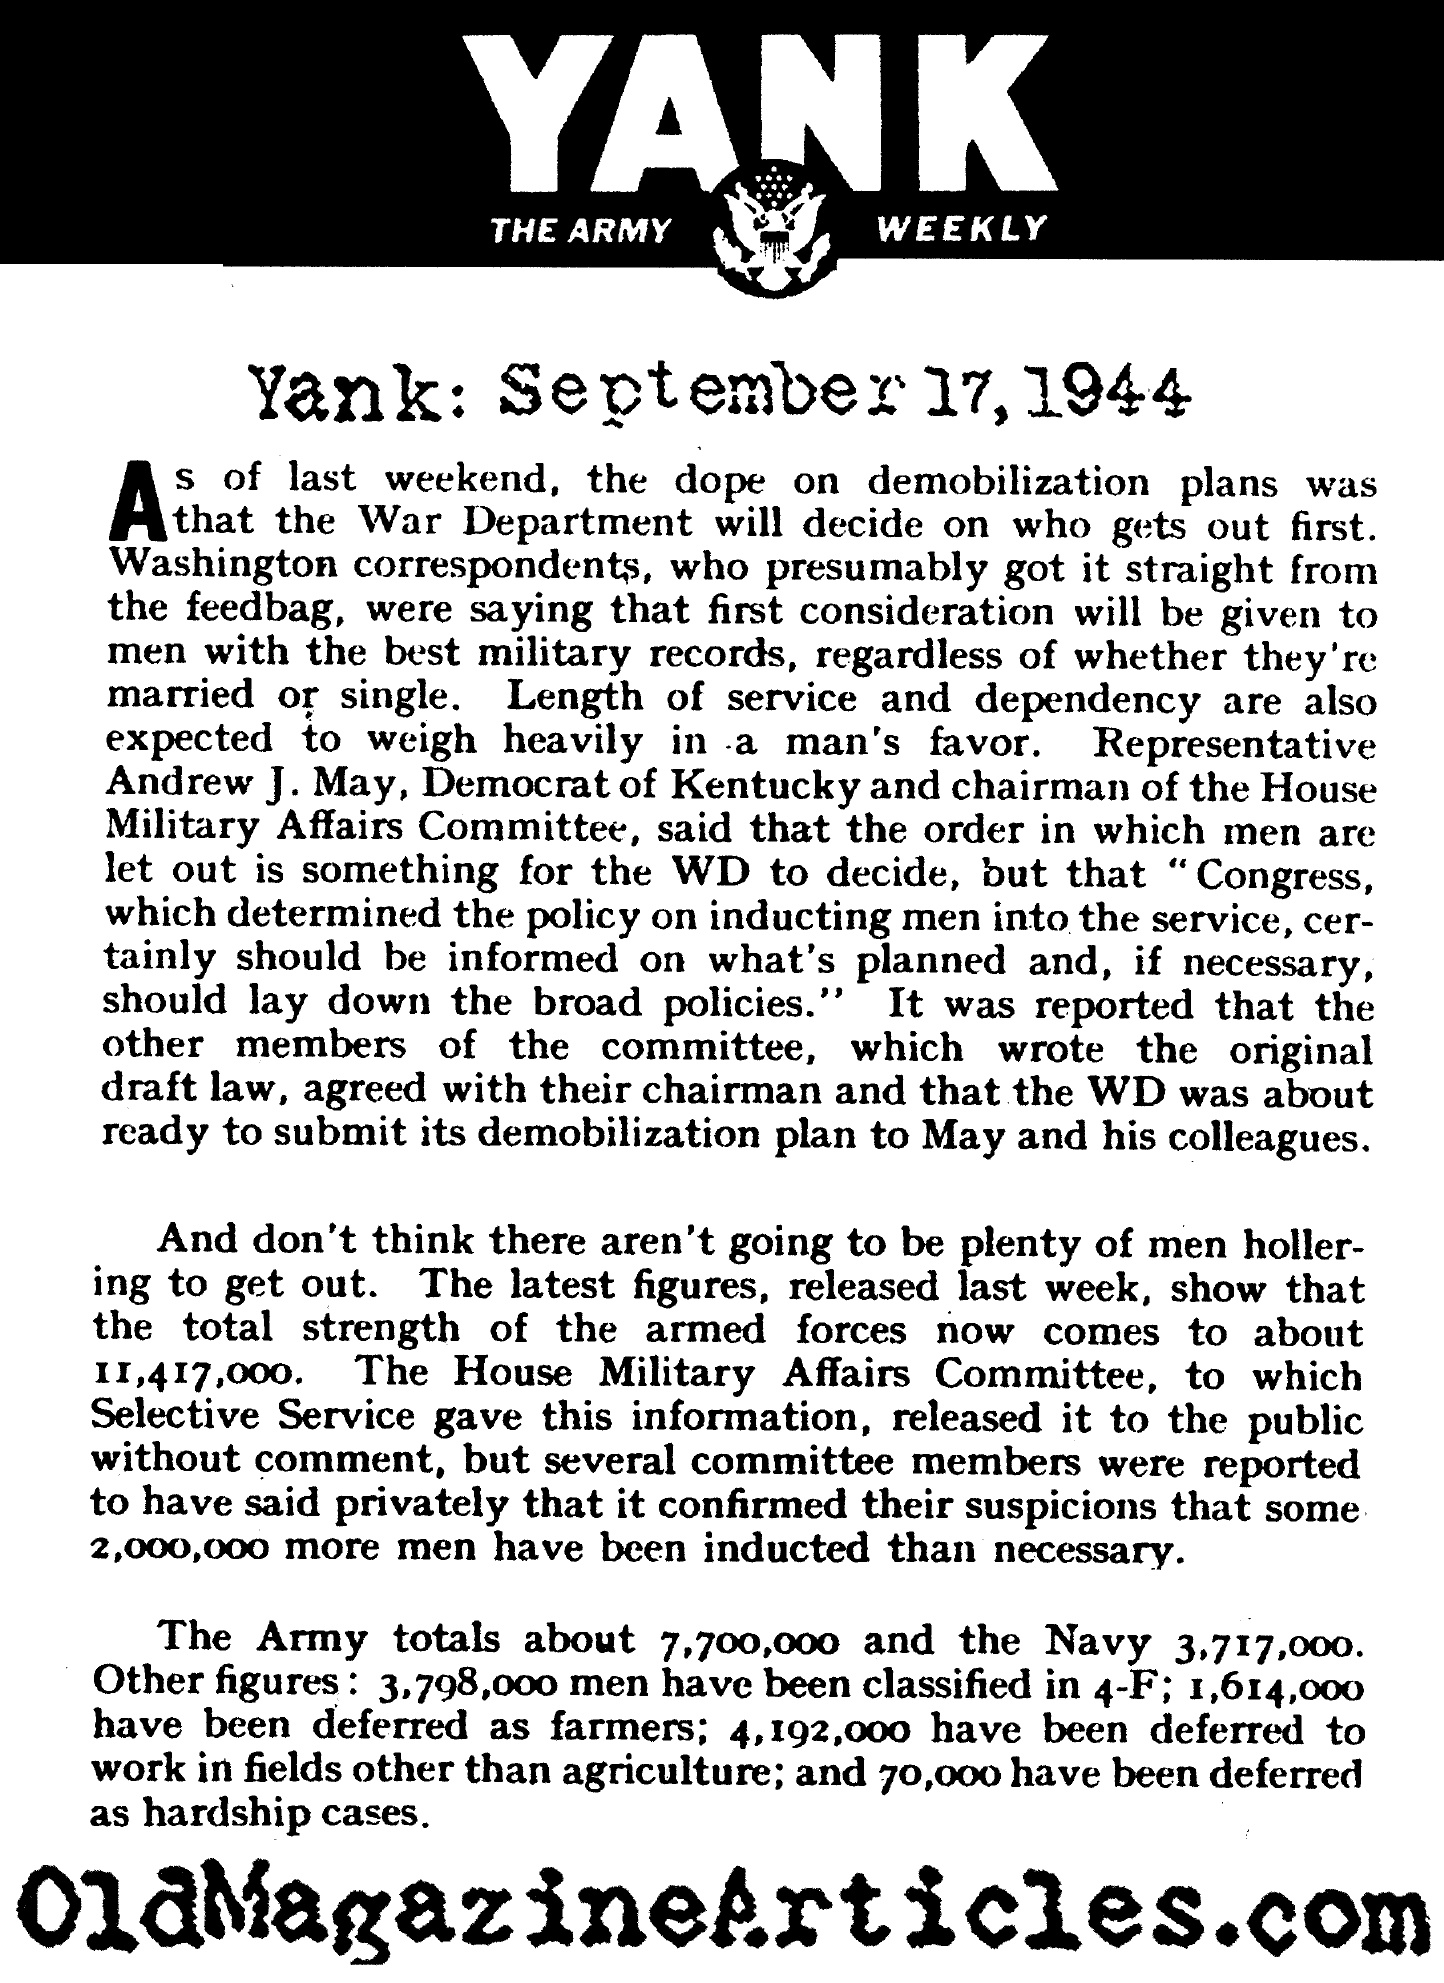 1944 Army Statistcs  (Yank Magazine, 1944)